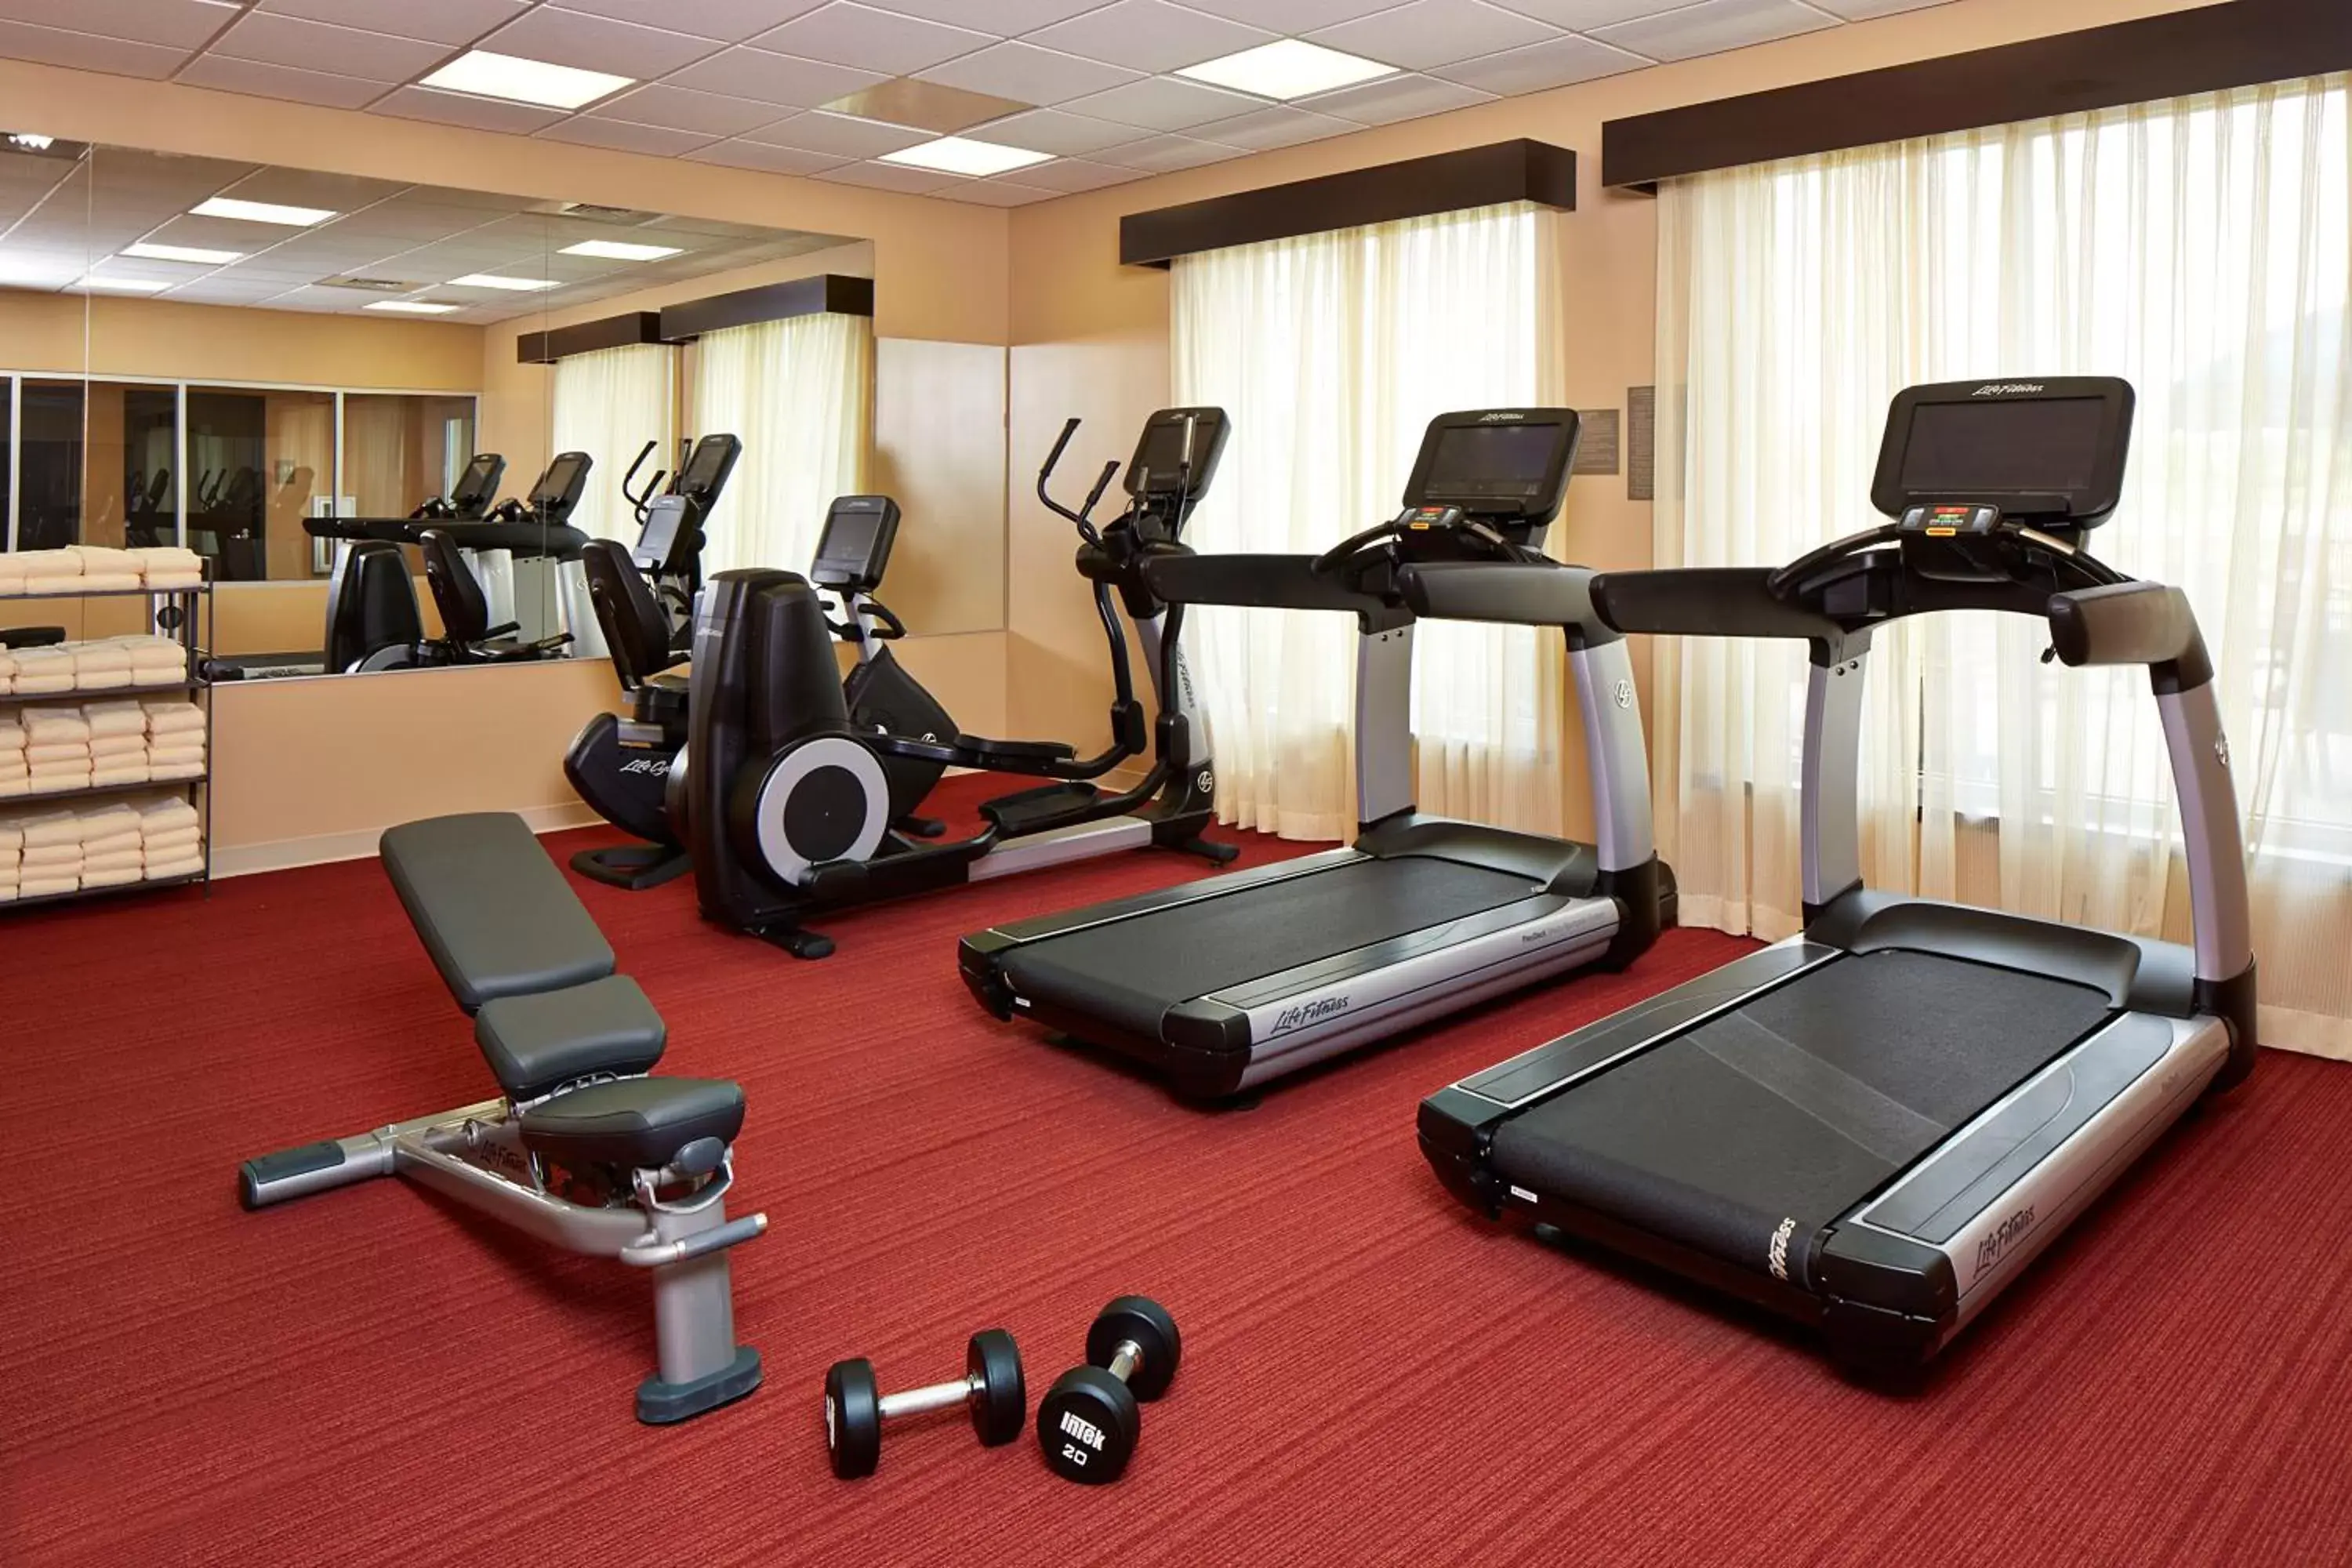 Fitness centre/facilities, Fitness Center/Facilities in Hyatt Place Lansing-East